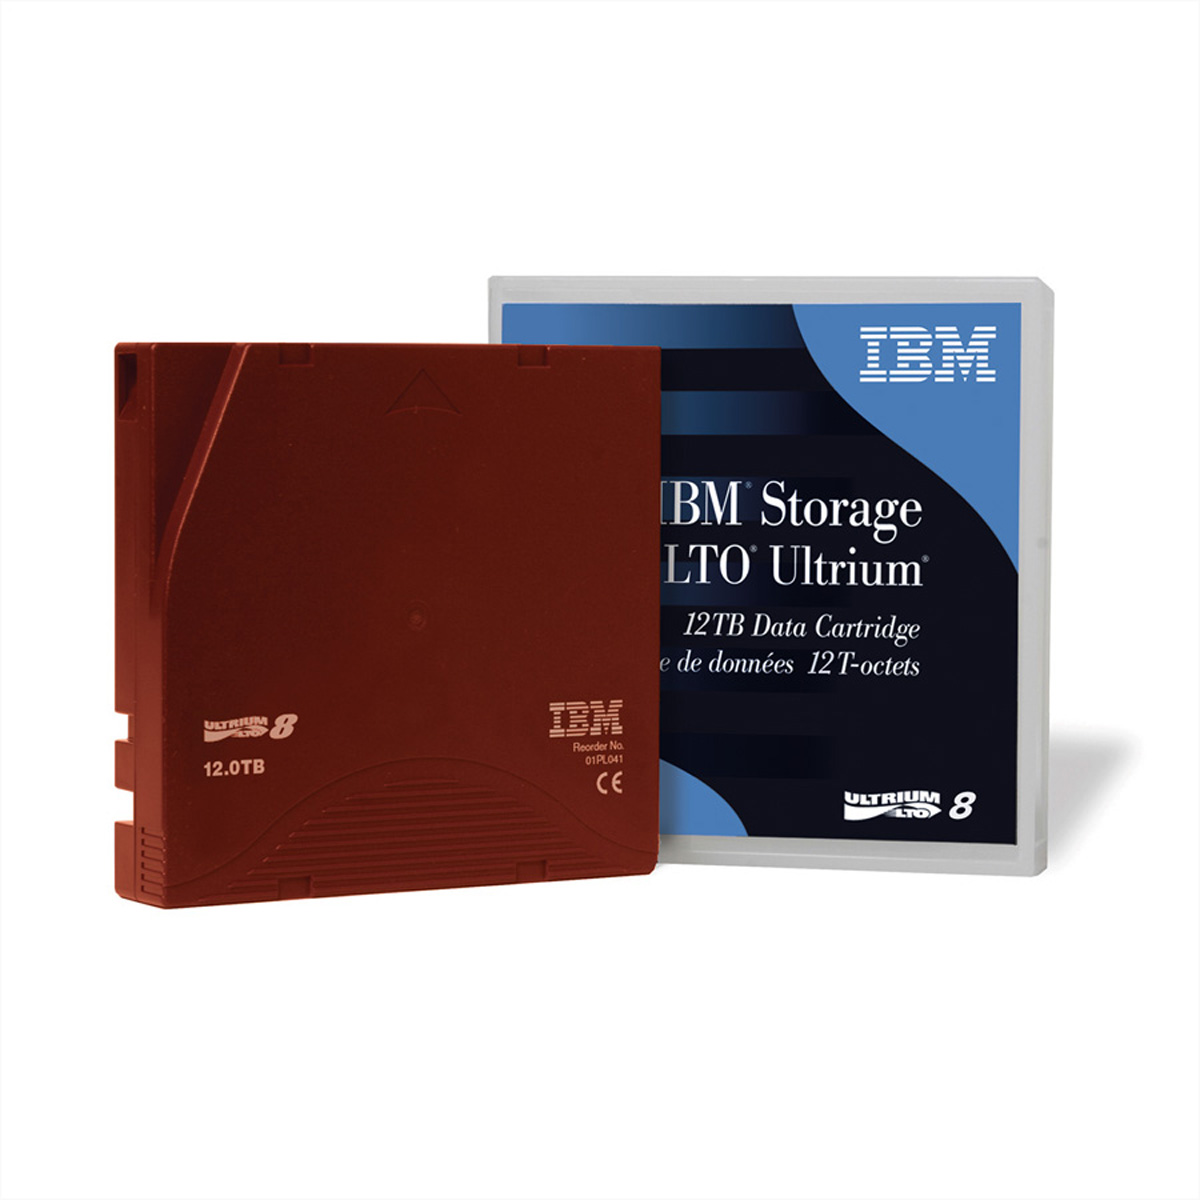 IBM Lenovo - LTO Ultrium 8 - 12 TB / 30 TB - Mit Strichcodeetikett